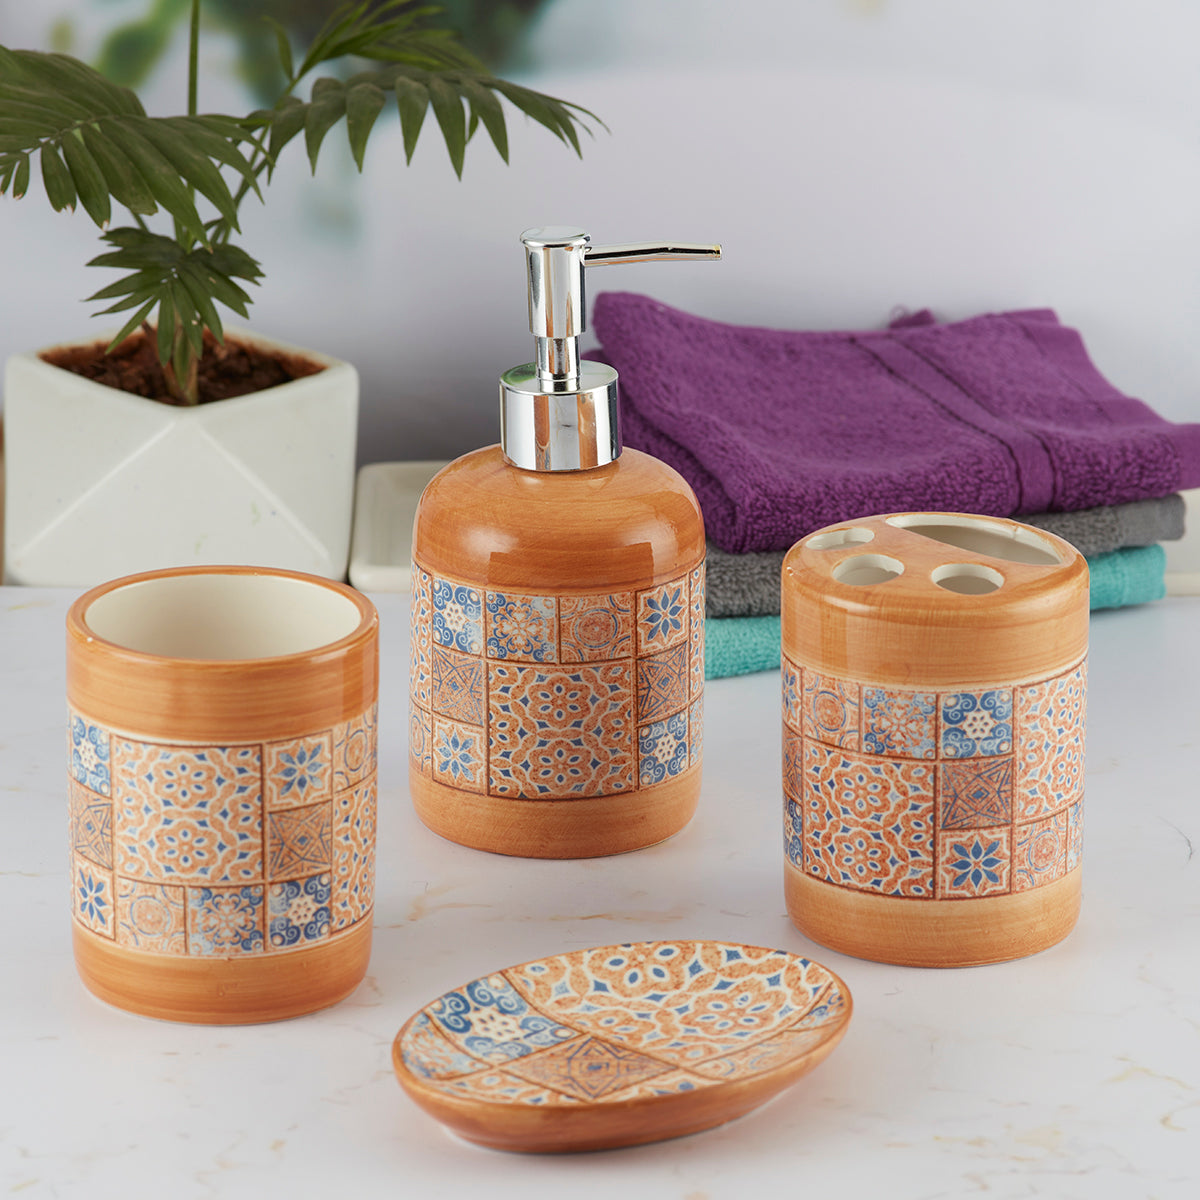 Ceramic Bathroom Accessories Set of 4 Bath Set with Soap Dispenser (9862)